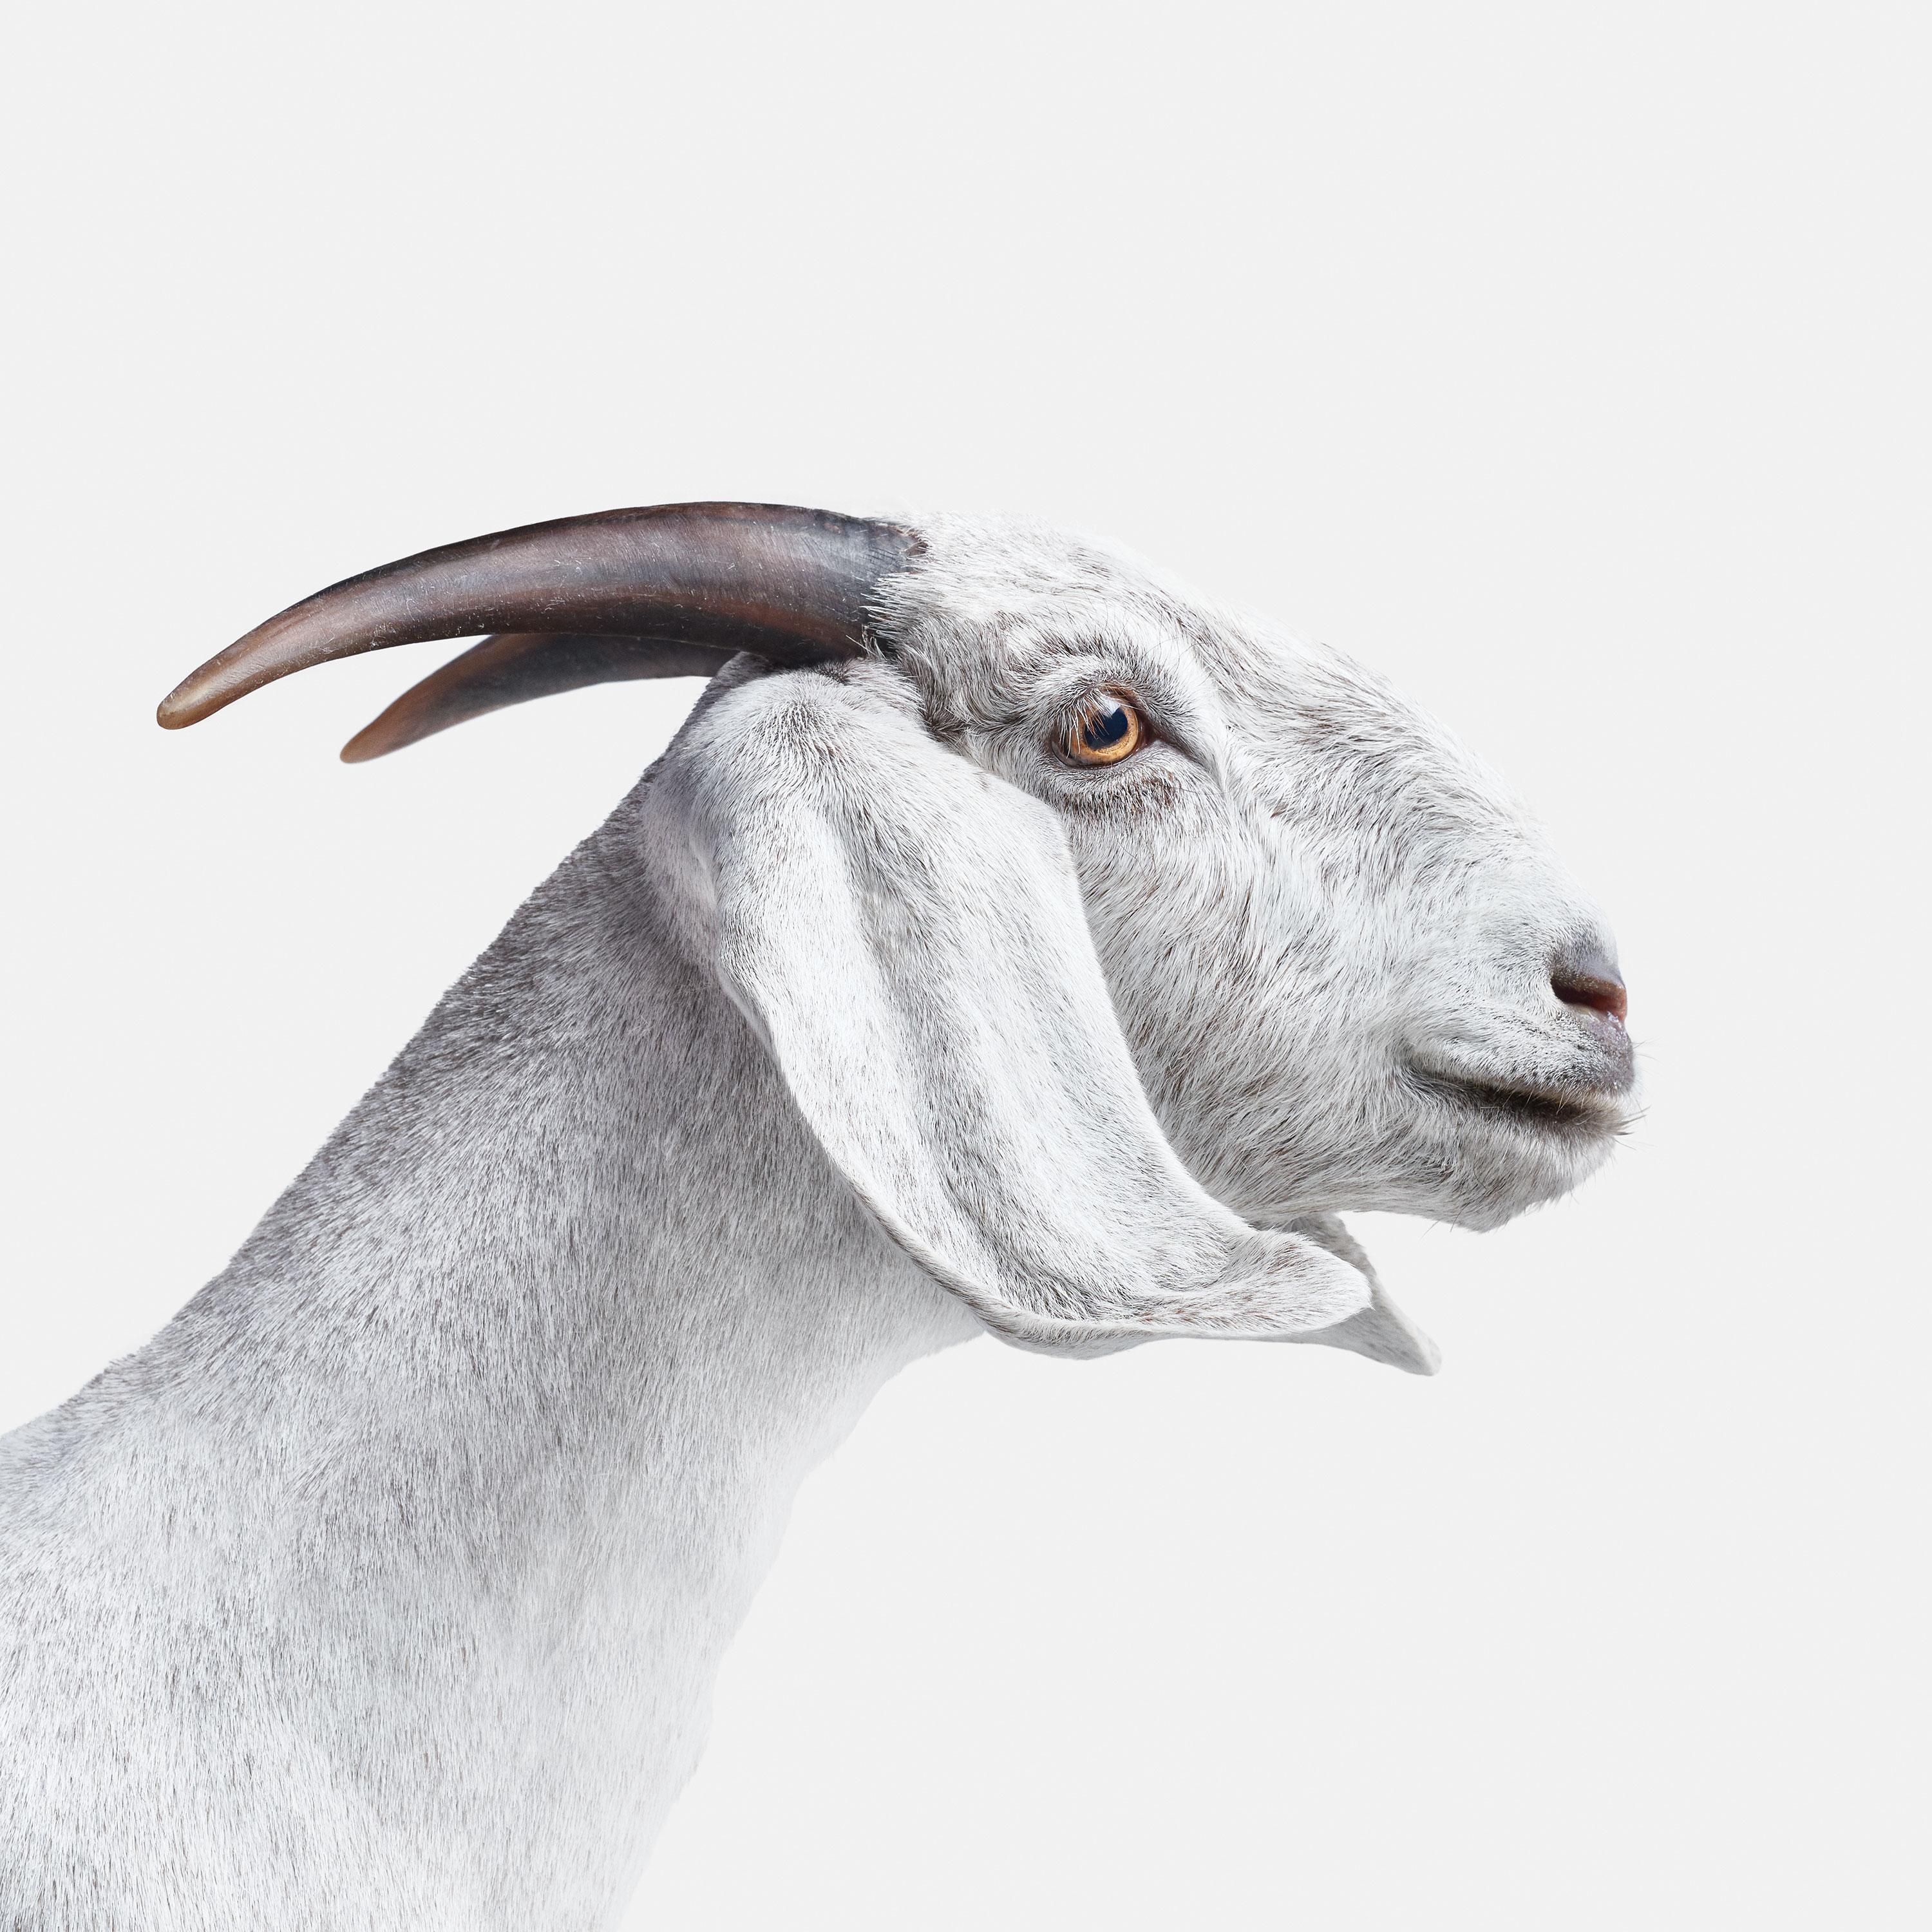 Randal Ford Animal Print - White Goat No. 1 (40" x 40")